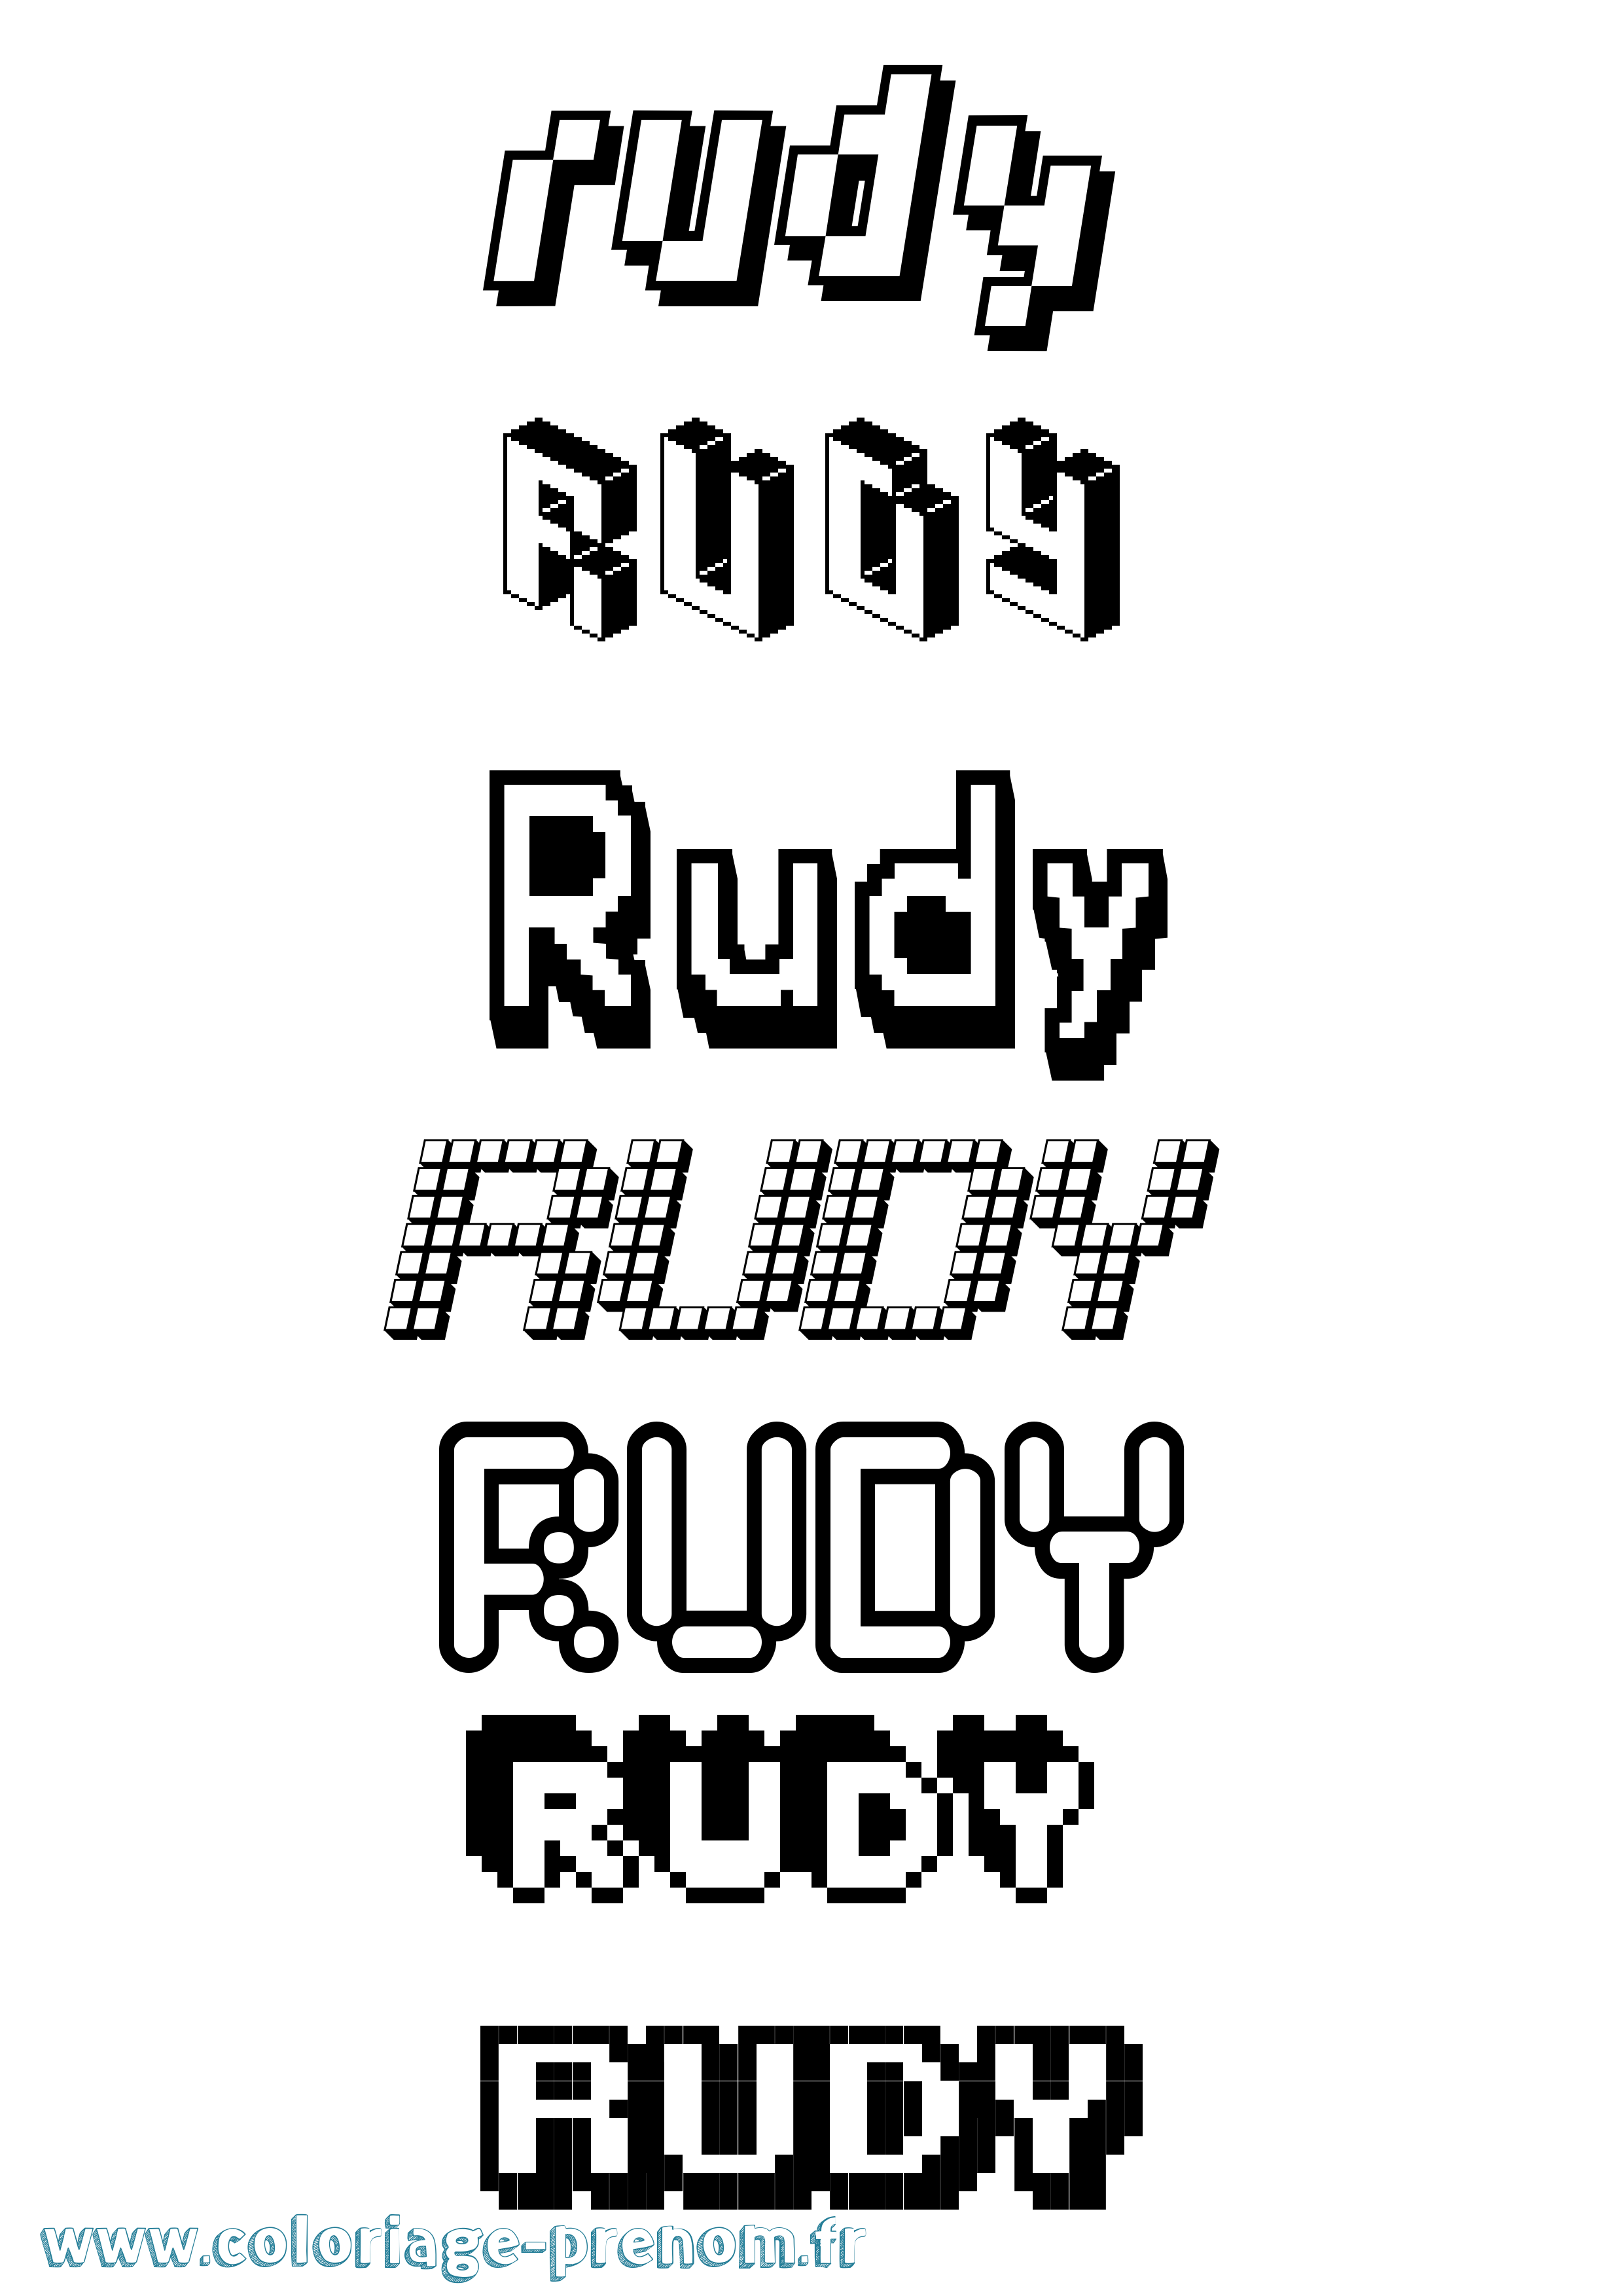 Coloriage prénom Rudy